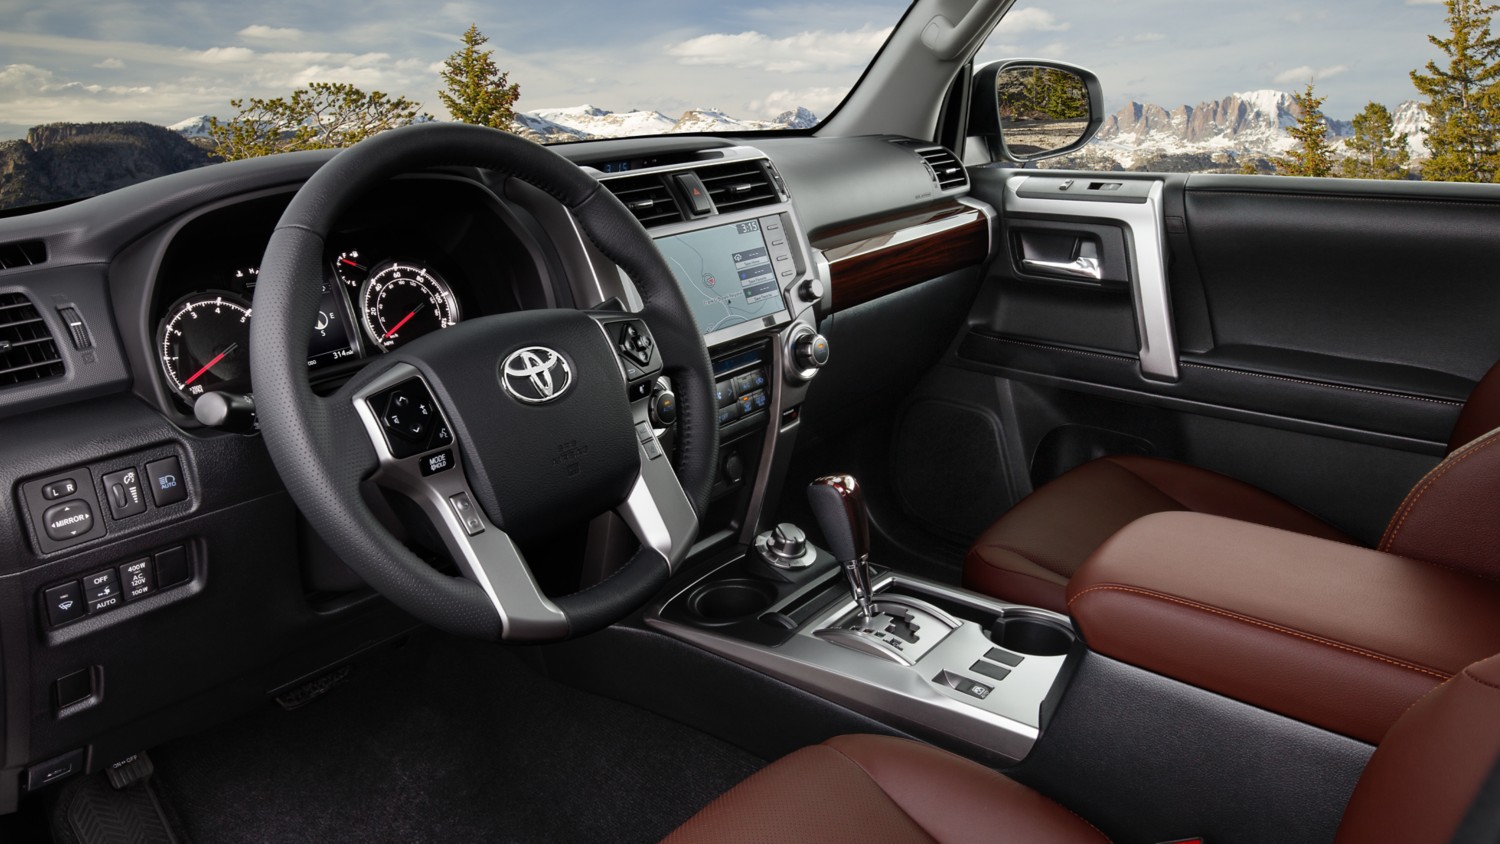 Toyota luxury vehicle